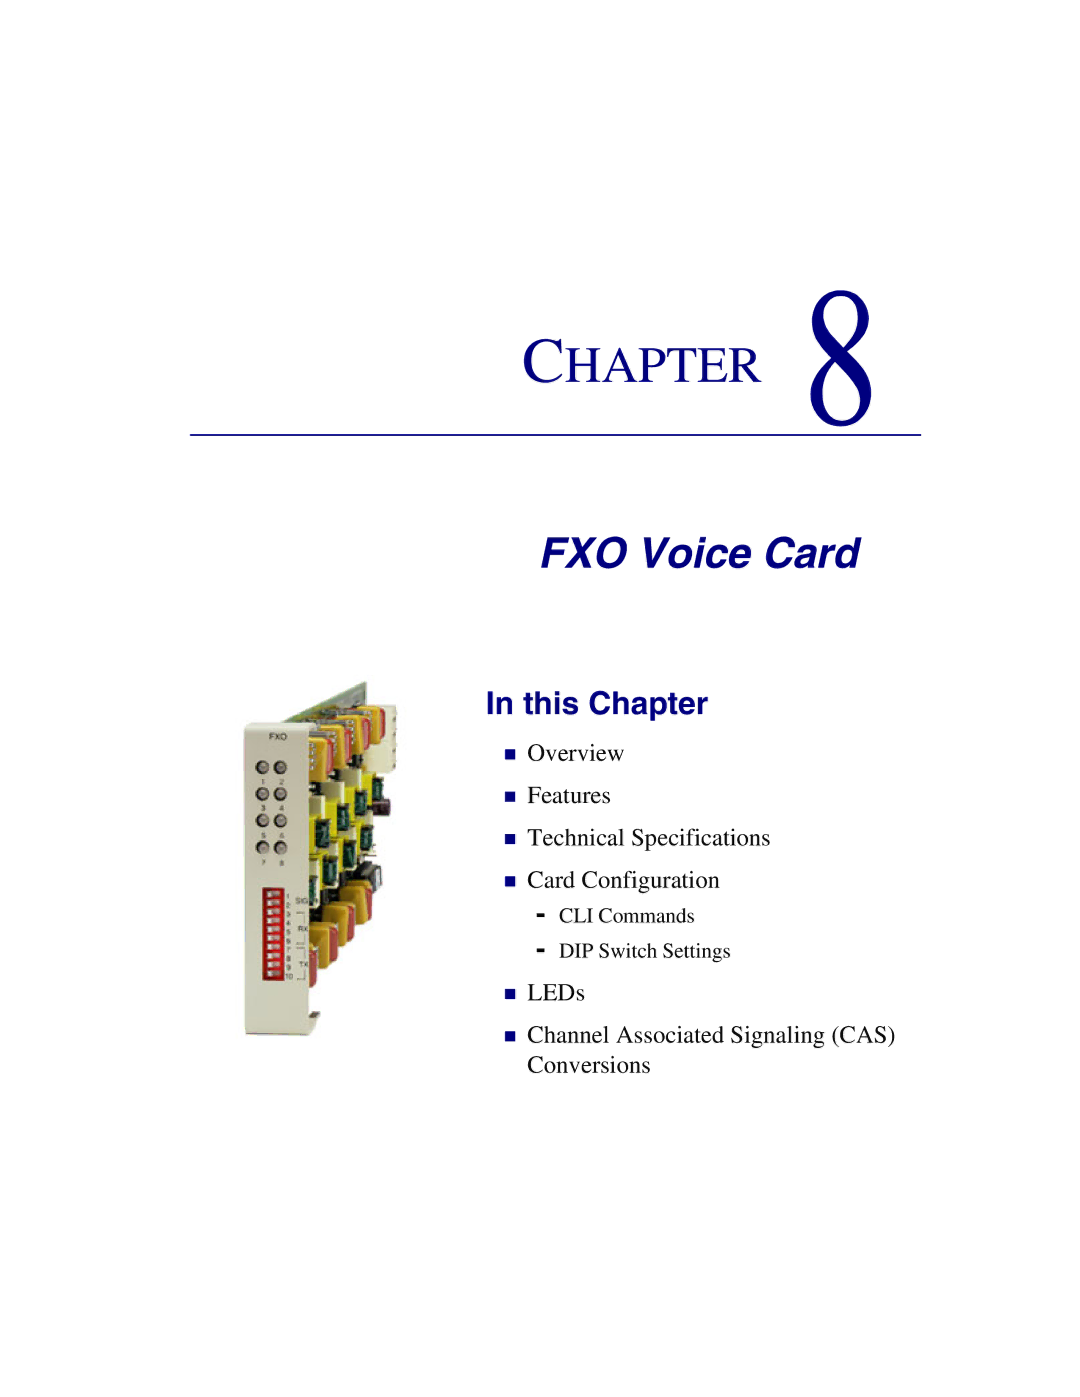 Carrier Access Axxius 800 user manual FXO Voice Card 